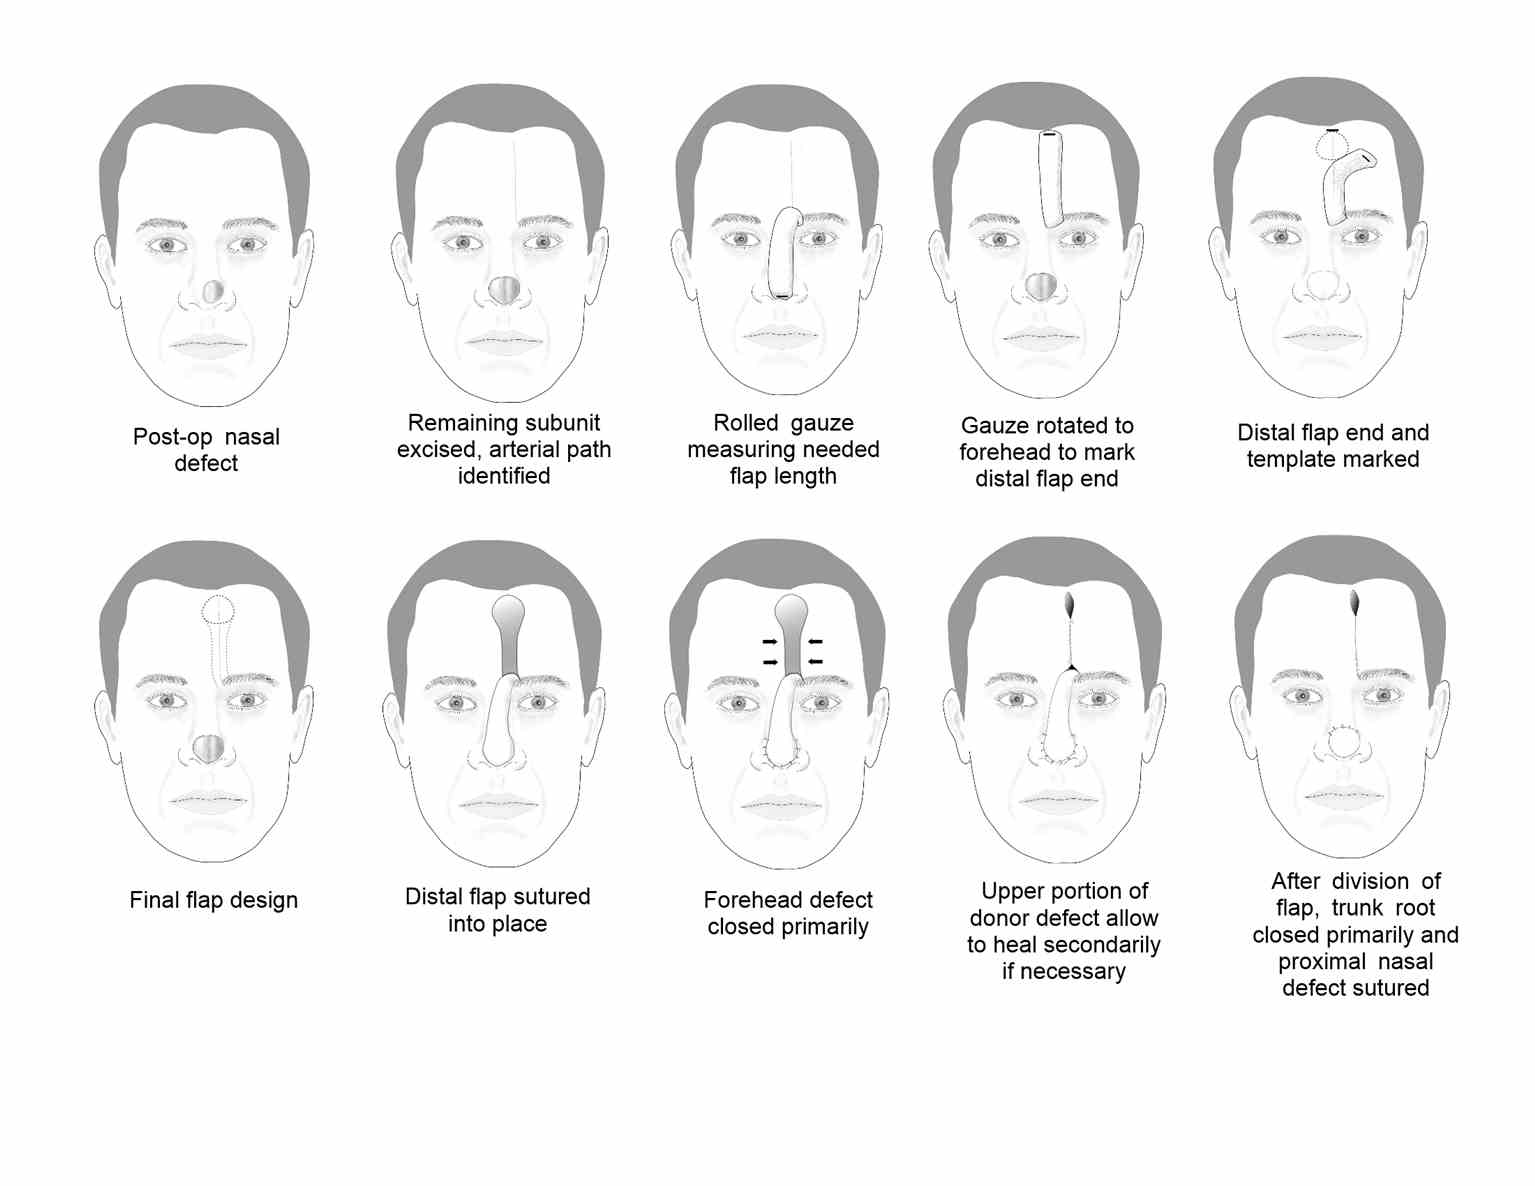 Forehead flap summary diagrams